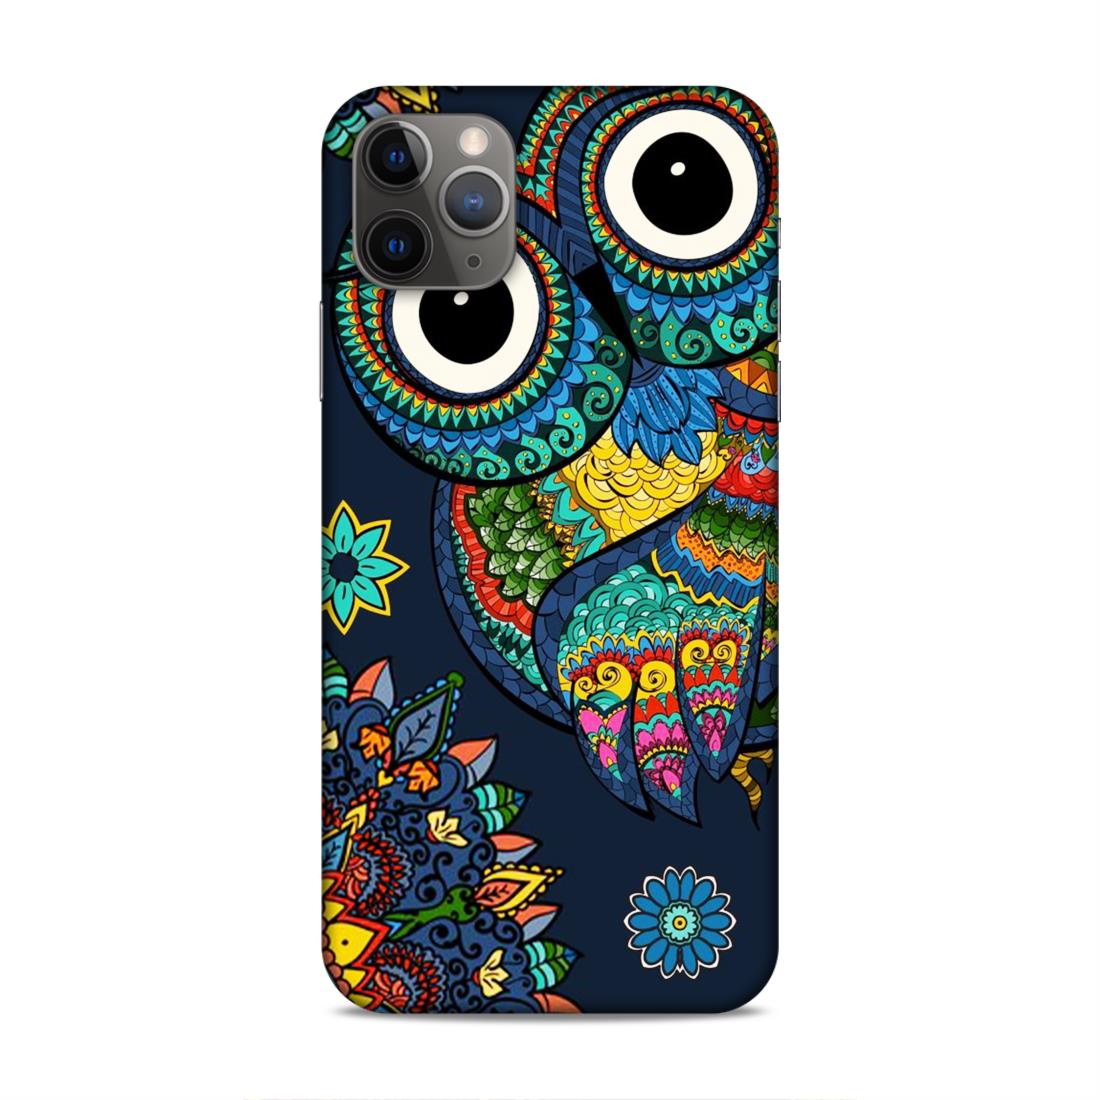 Owl and Mandala Flower Hard Back Case For Apple iPhone 11 Pro Max